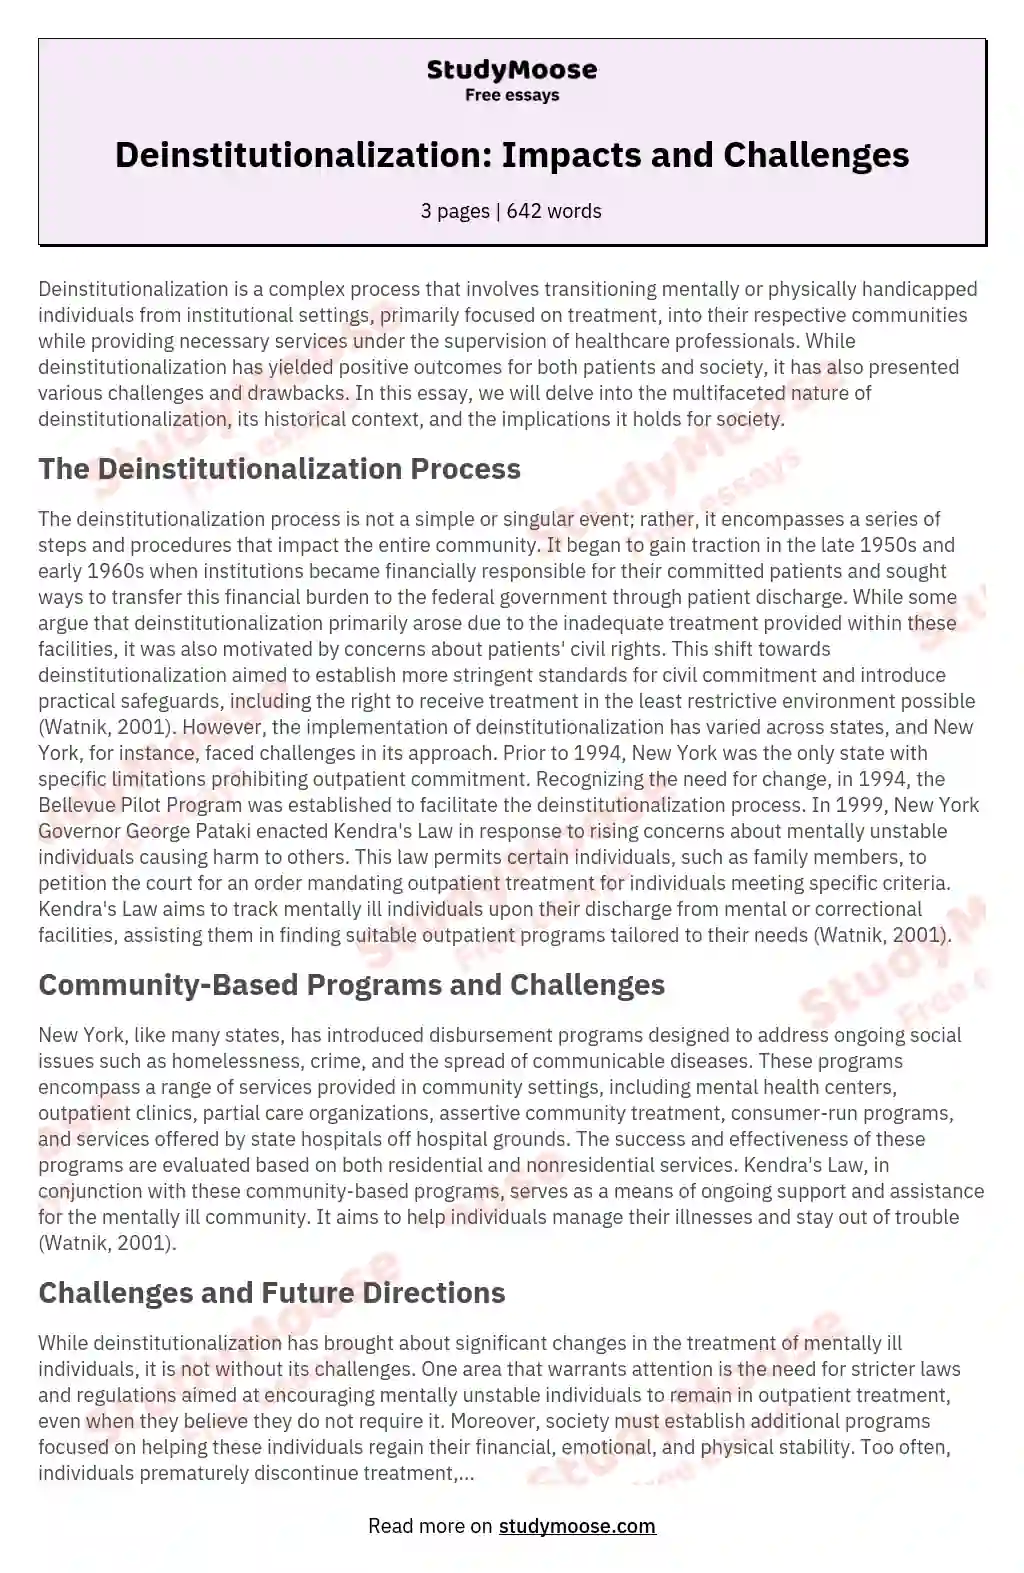 Deinstitutionalization: Impacts and Challenges essay